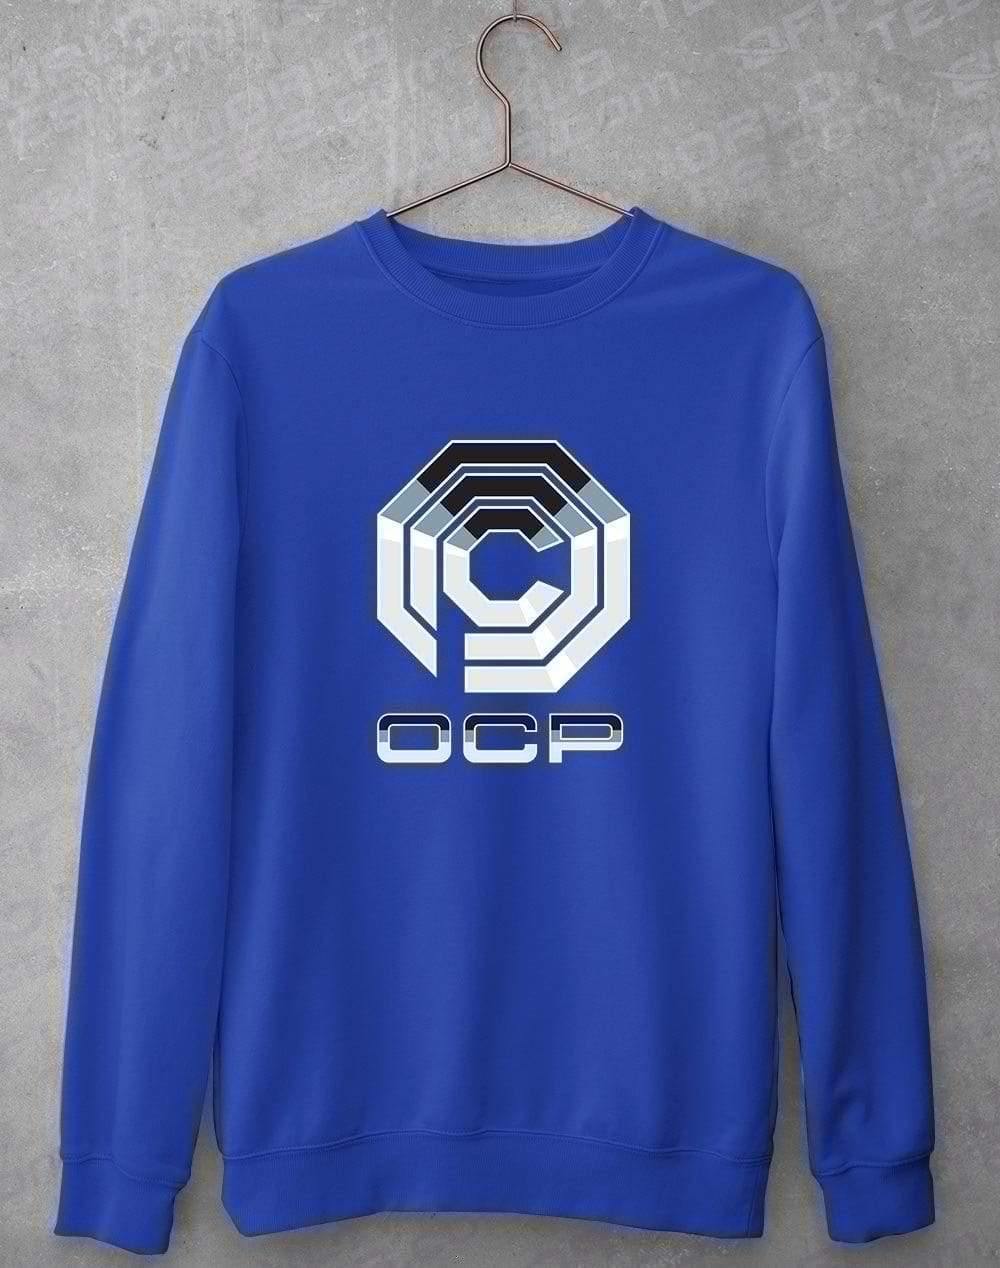 Omni Consumer Products Sweatshirt S / Royal Blue  - Off World Tees